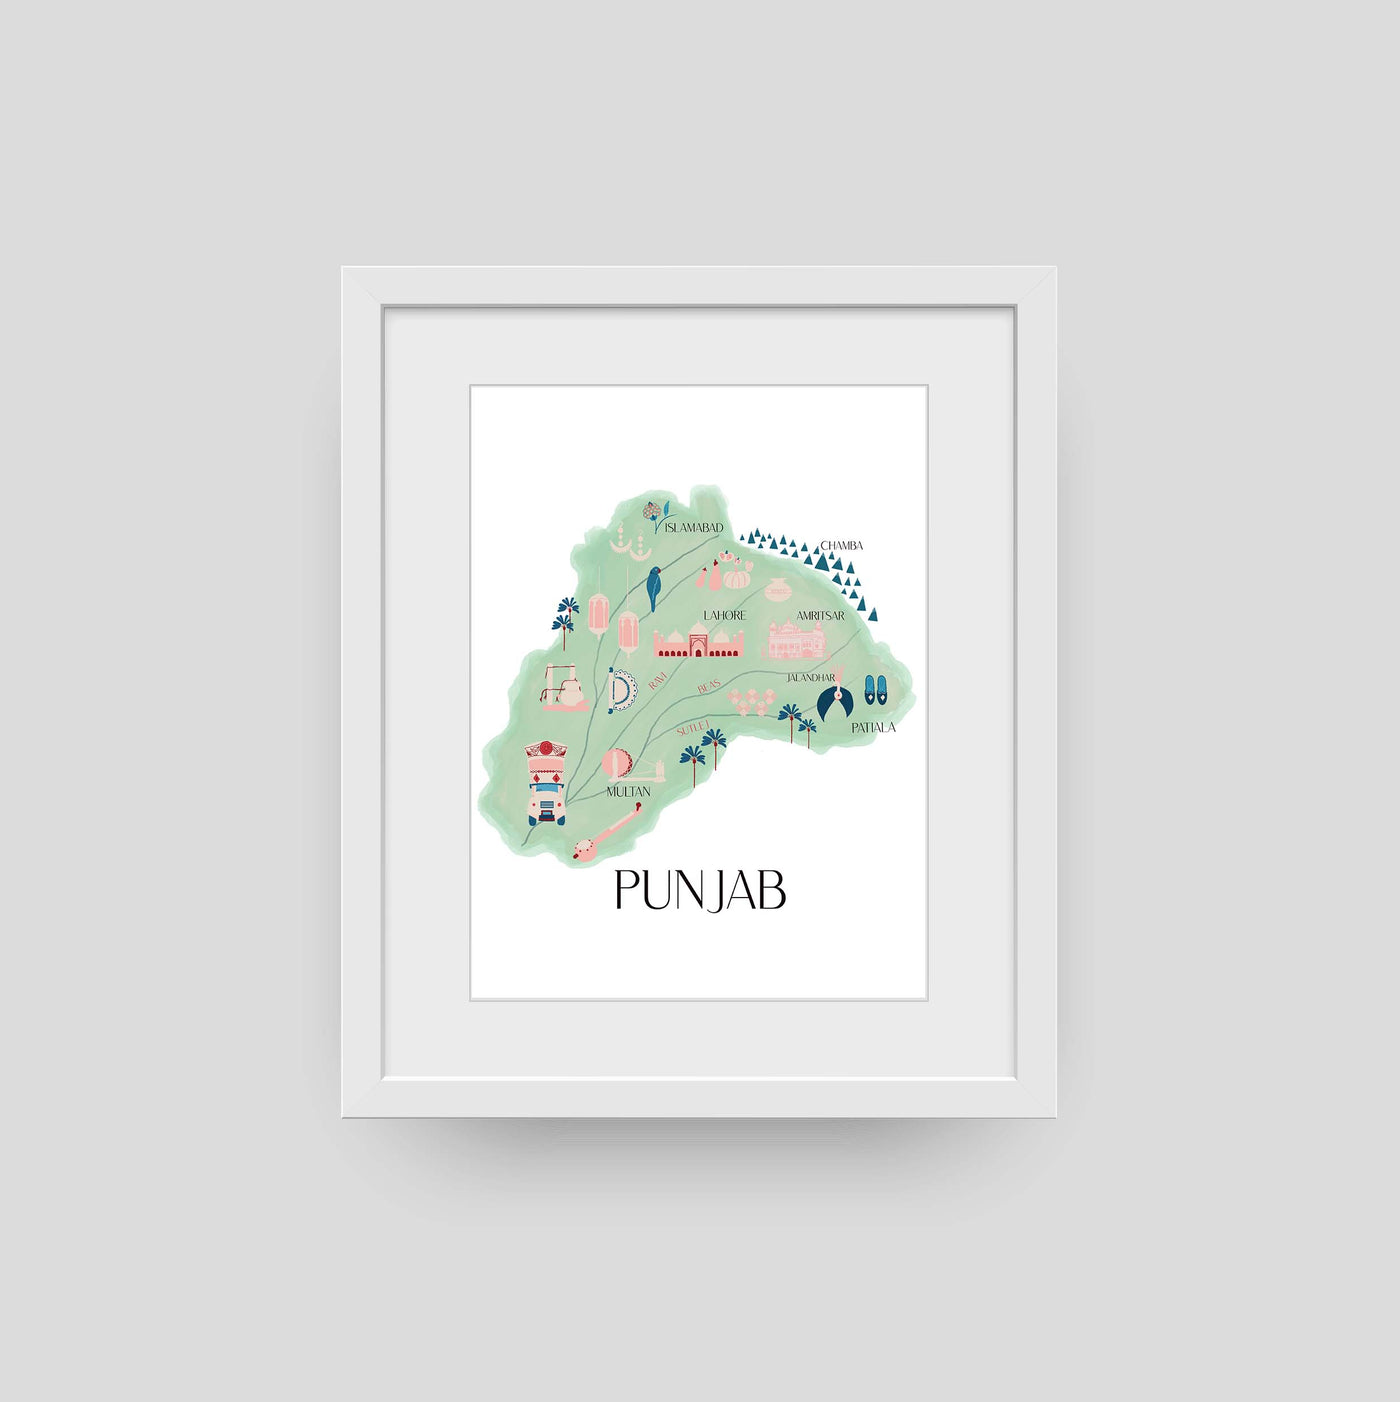 Punjab Illustrated Map by Jatinder Creates 